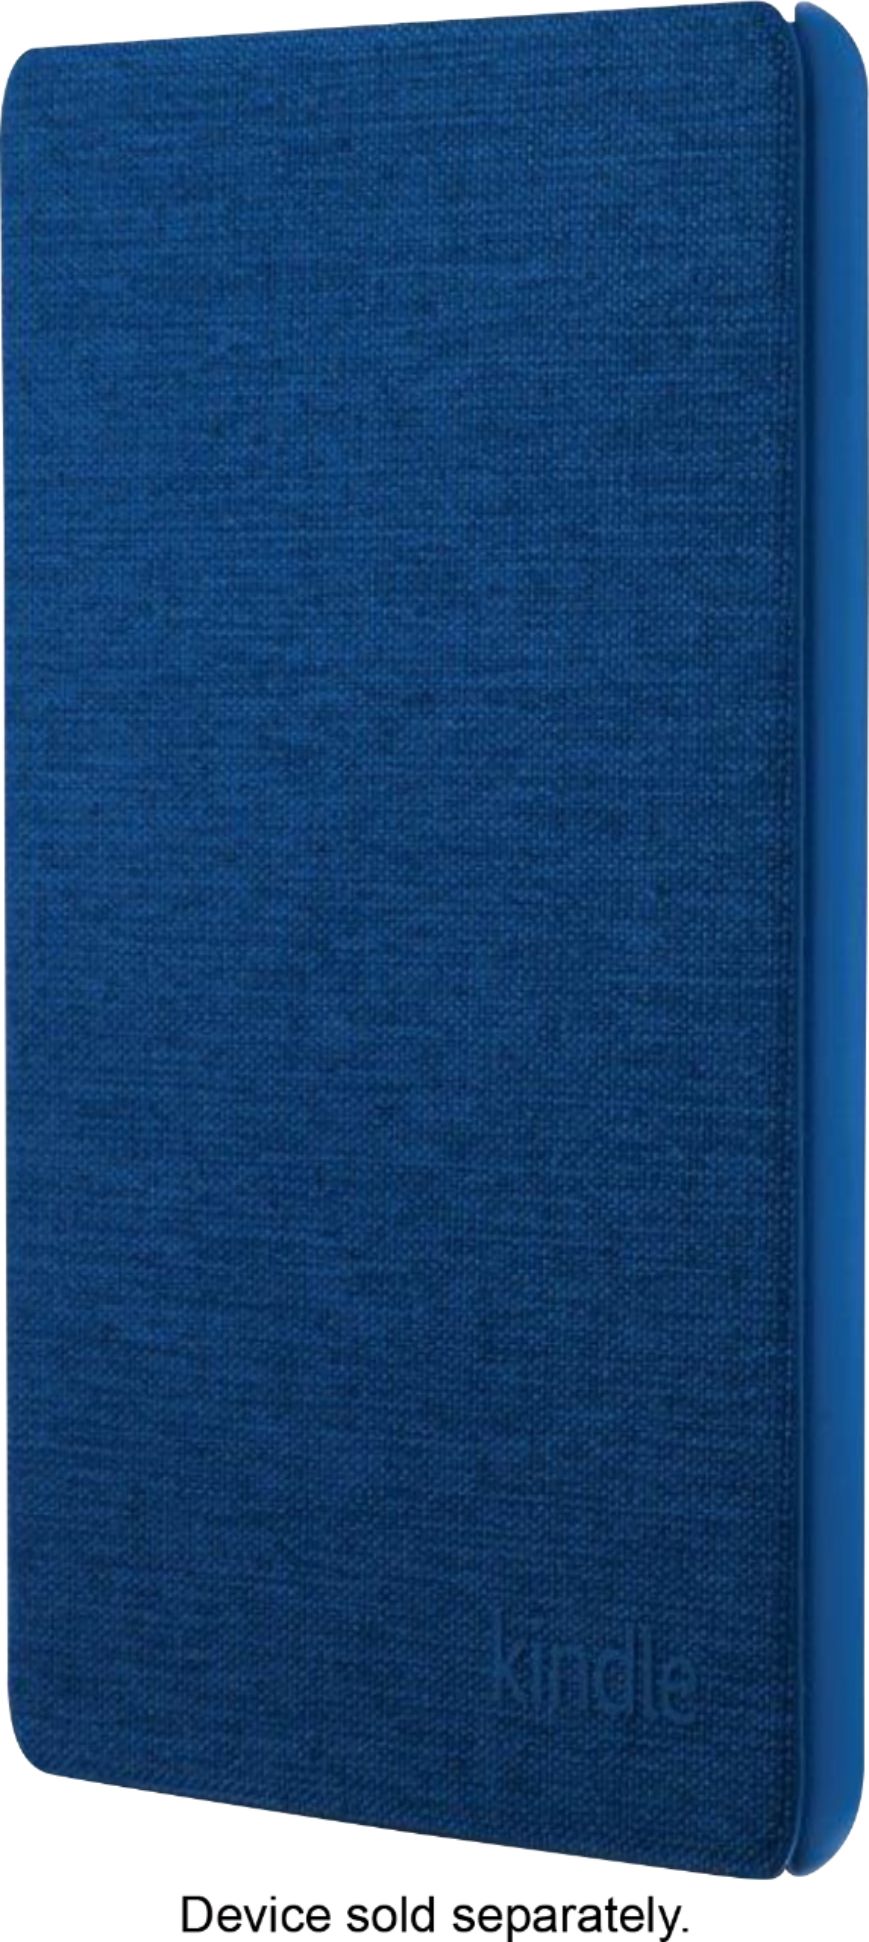 Left View: Amazon - Kindle Fabric Cover - Cobalt Blue